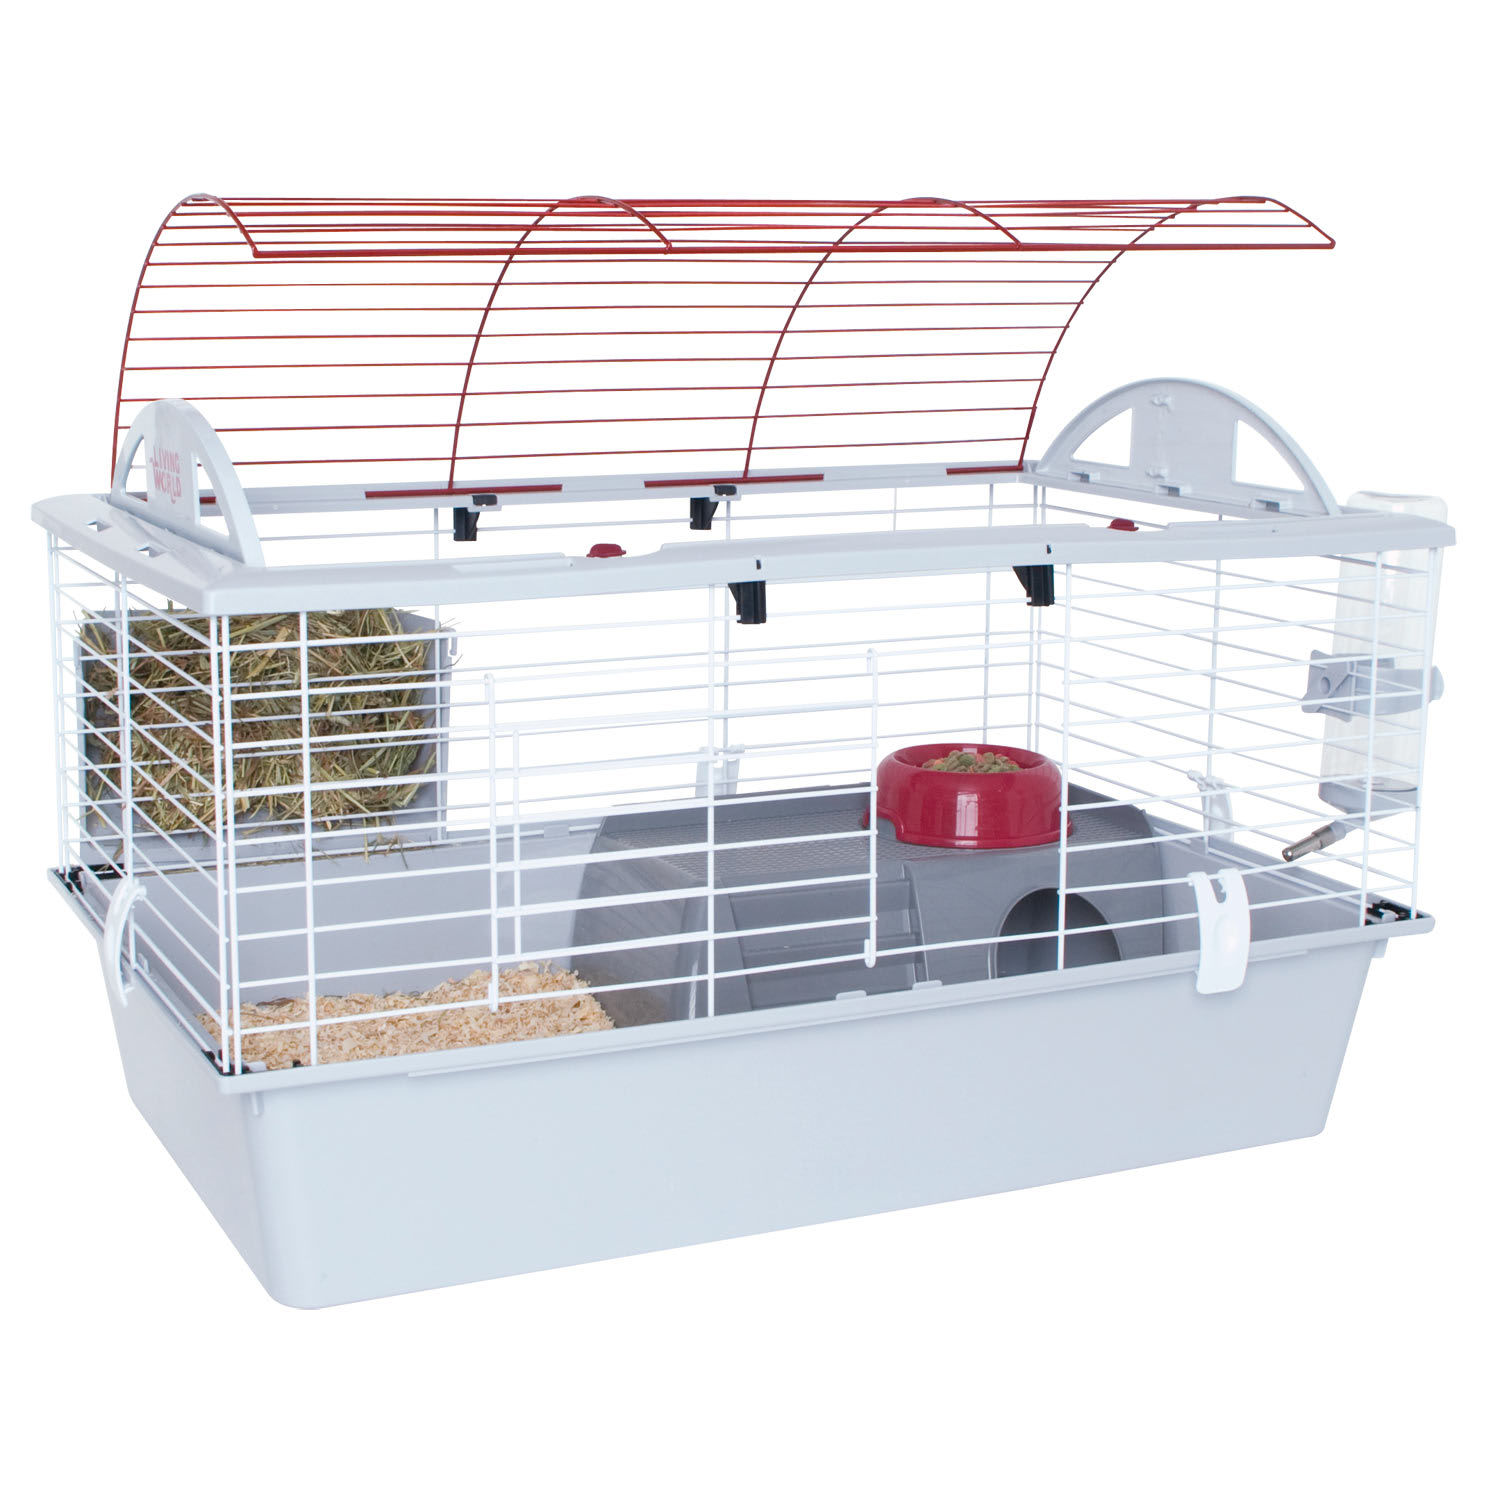 Cage Kit X-Large Rabbit Guinea Pig Chinchilla Pet Living Area Habitat Home Space 